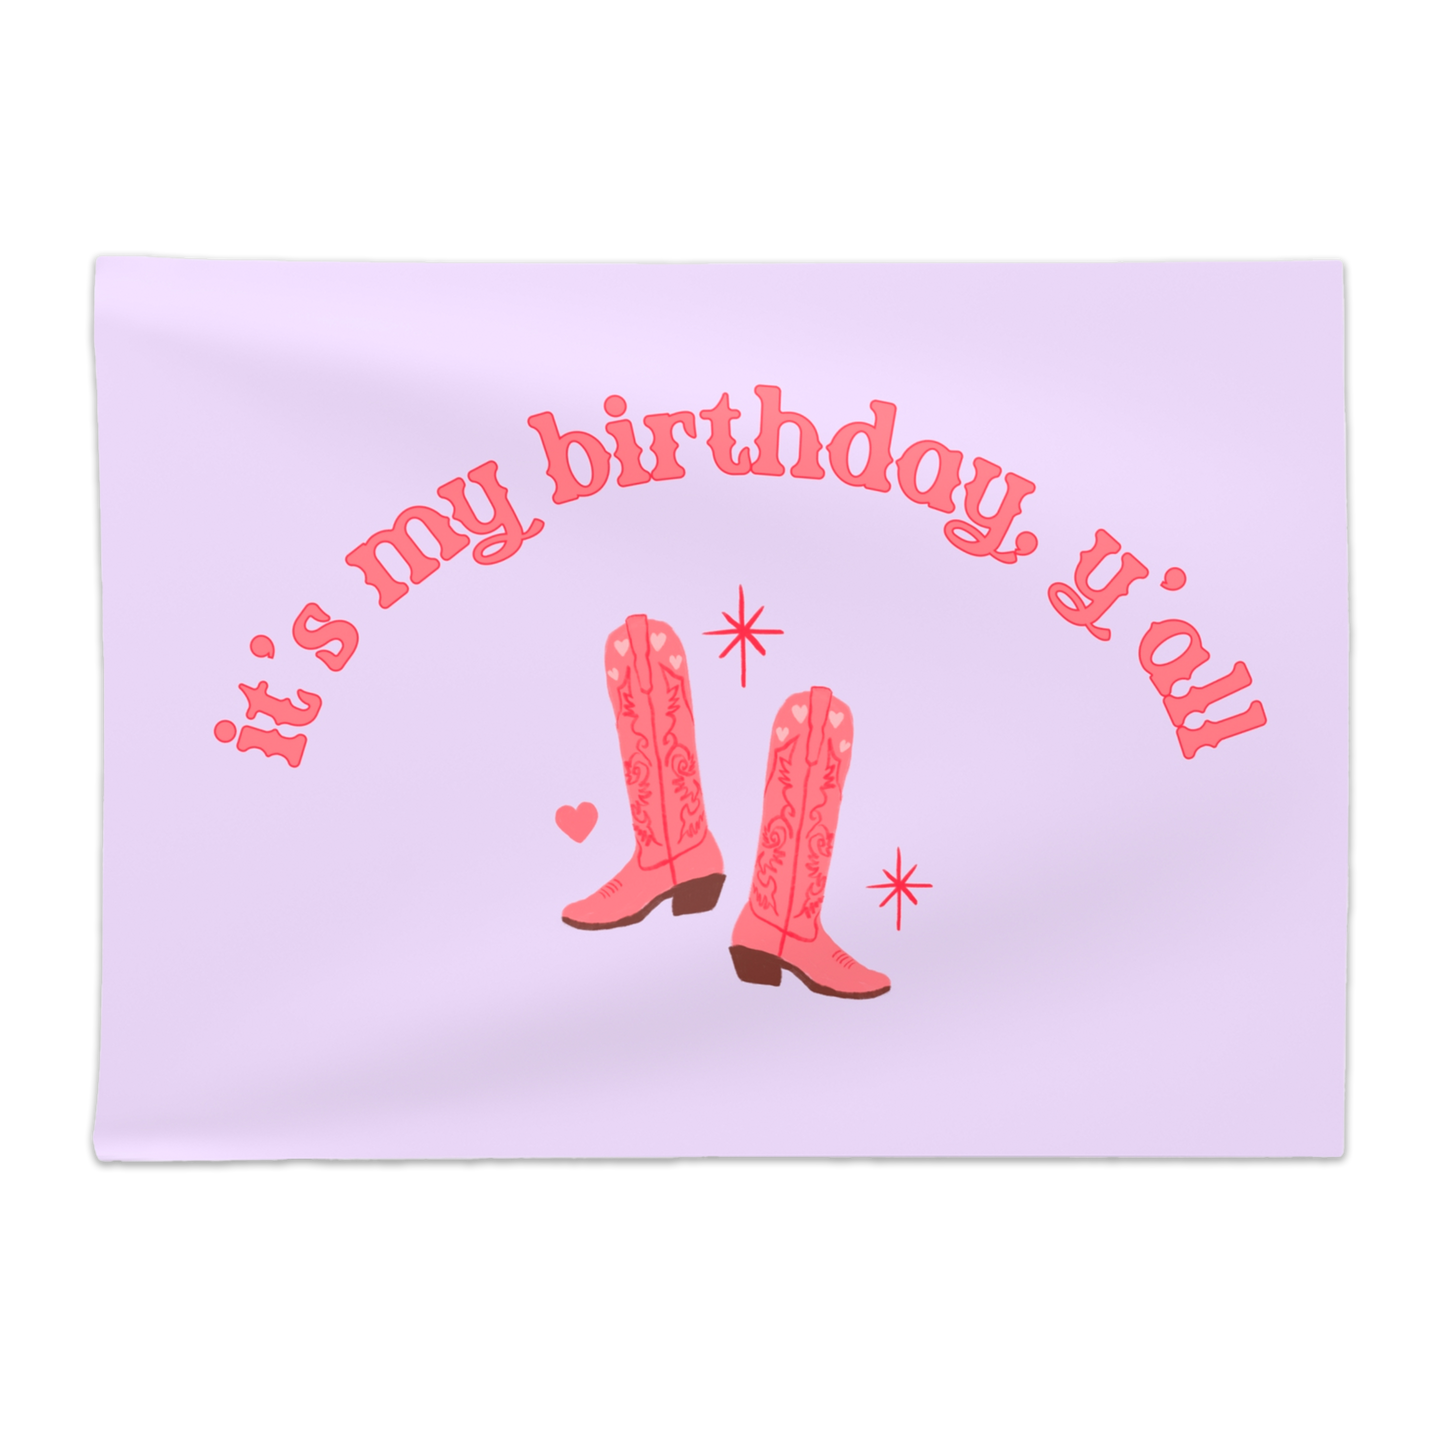 Cowgirl Birthday Banner